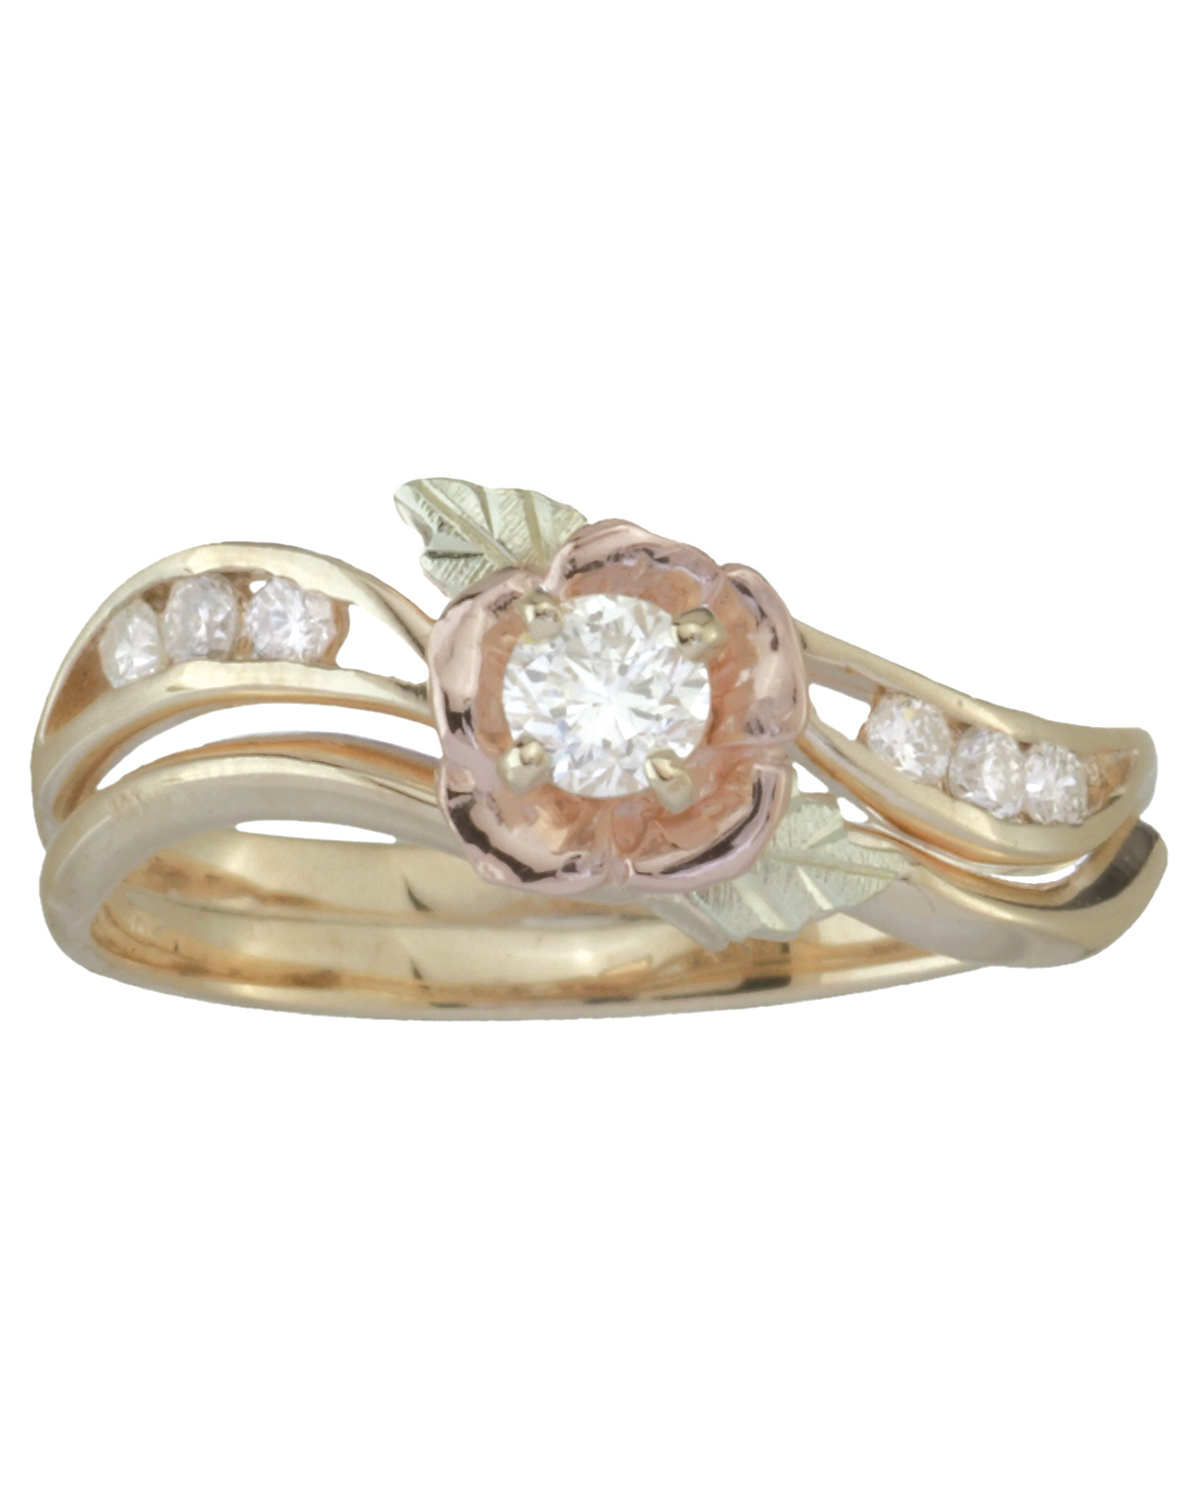 Diamond Flower and Channel Set Diamond Wedding Ring Set, 10k Yellow Gold